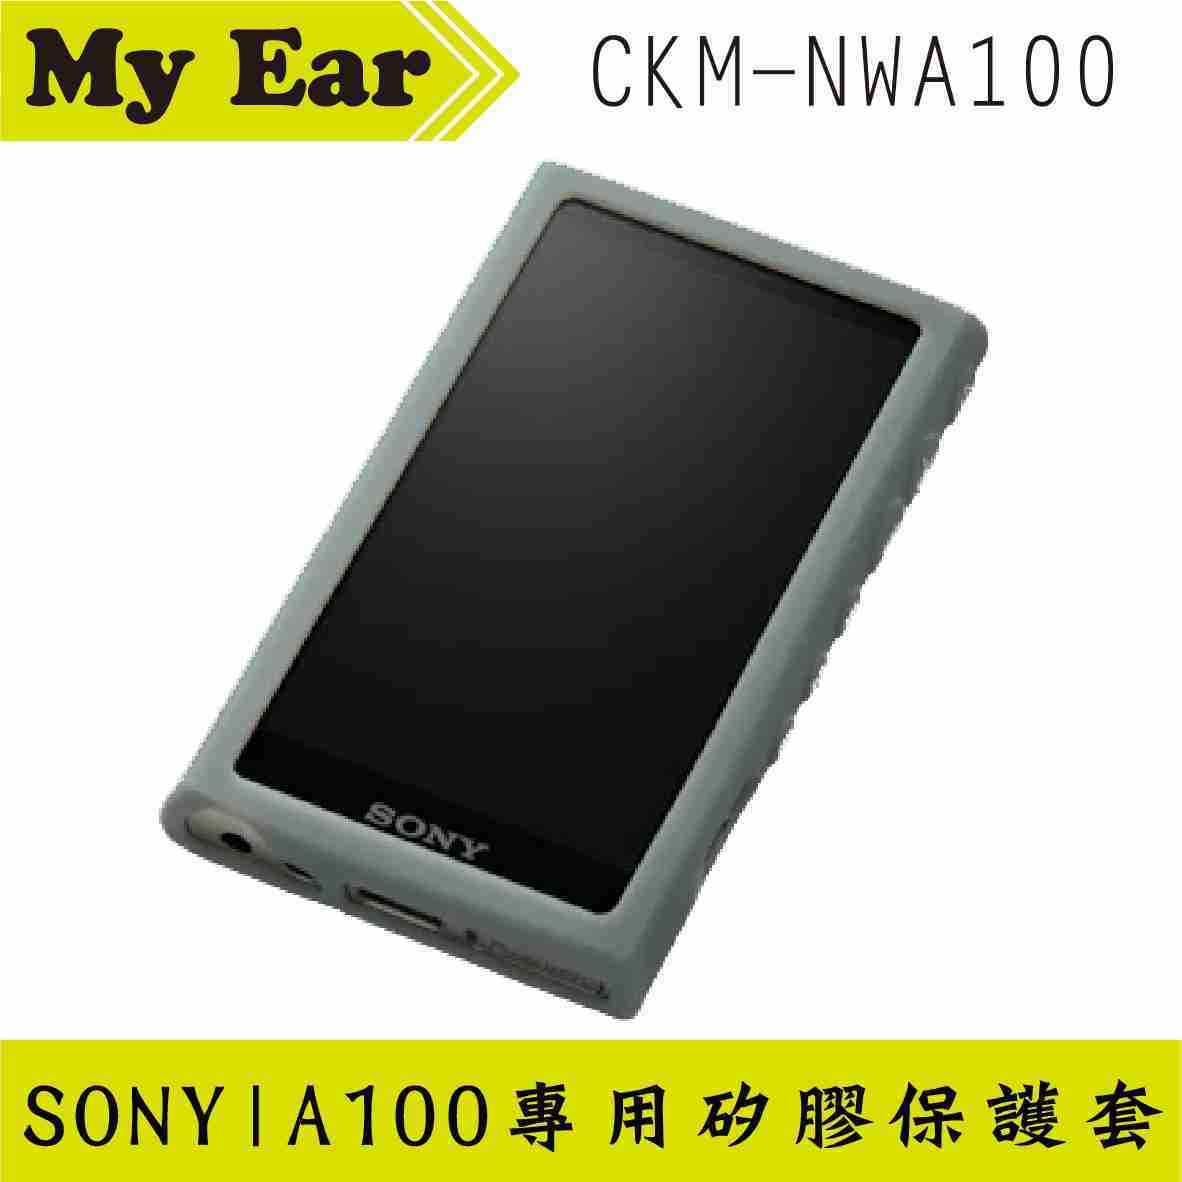 SONY 索尼 CKM-NWA100 綠色 Walkman® 專用矽膠保護殼 | My Ear 耳機專門店